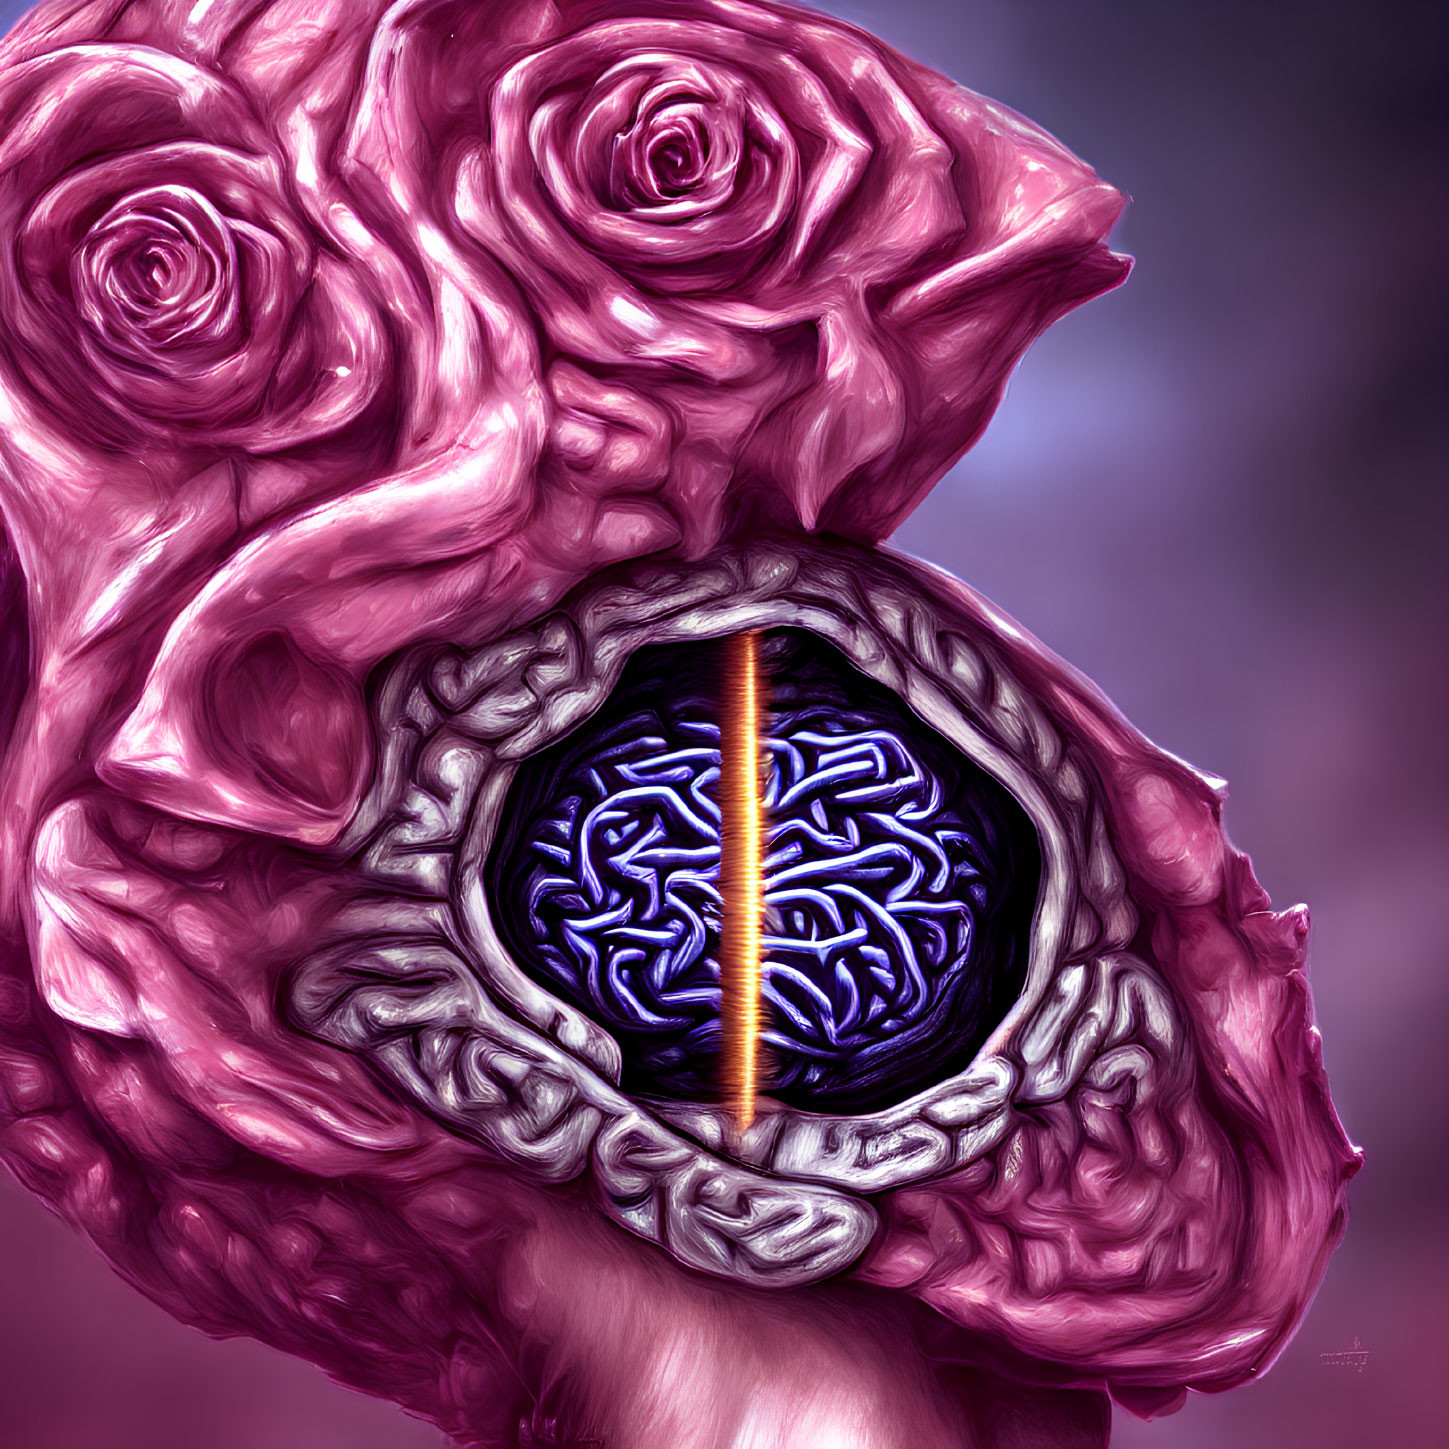 Surreal digital artwork: brain in eye with stone-like rose petals on purple background